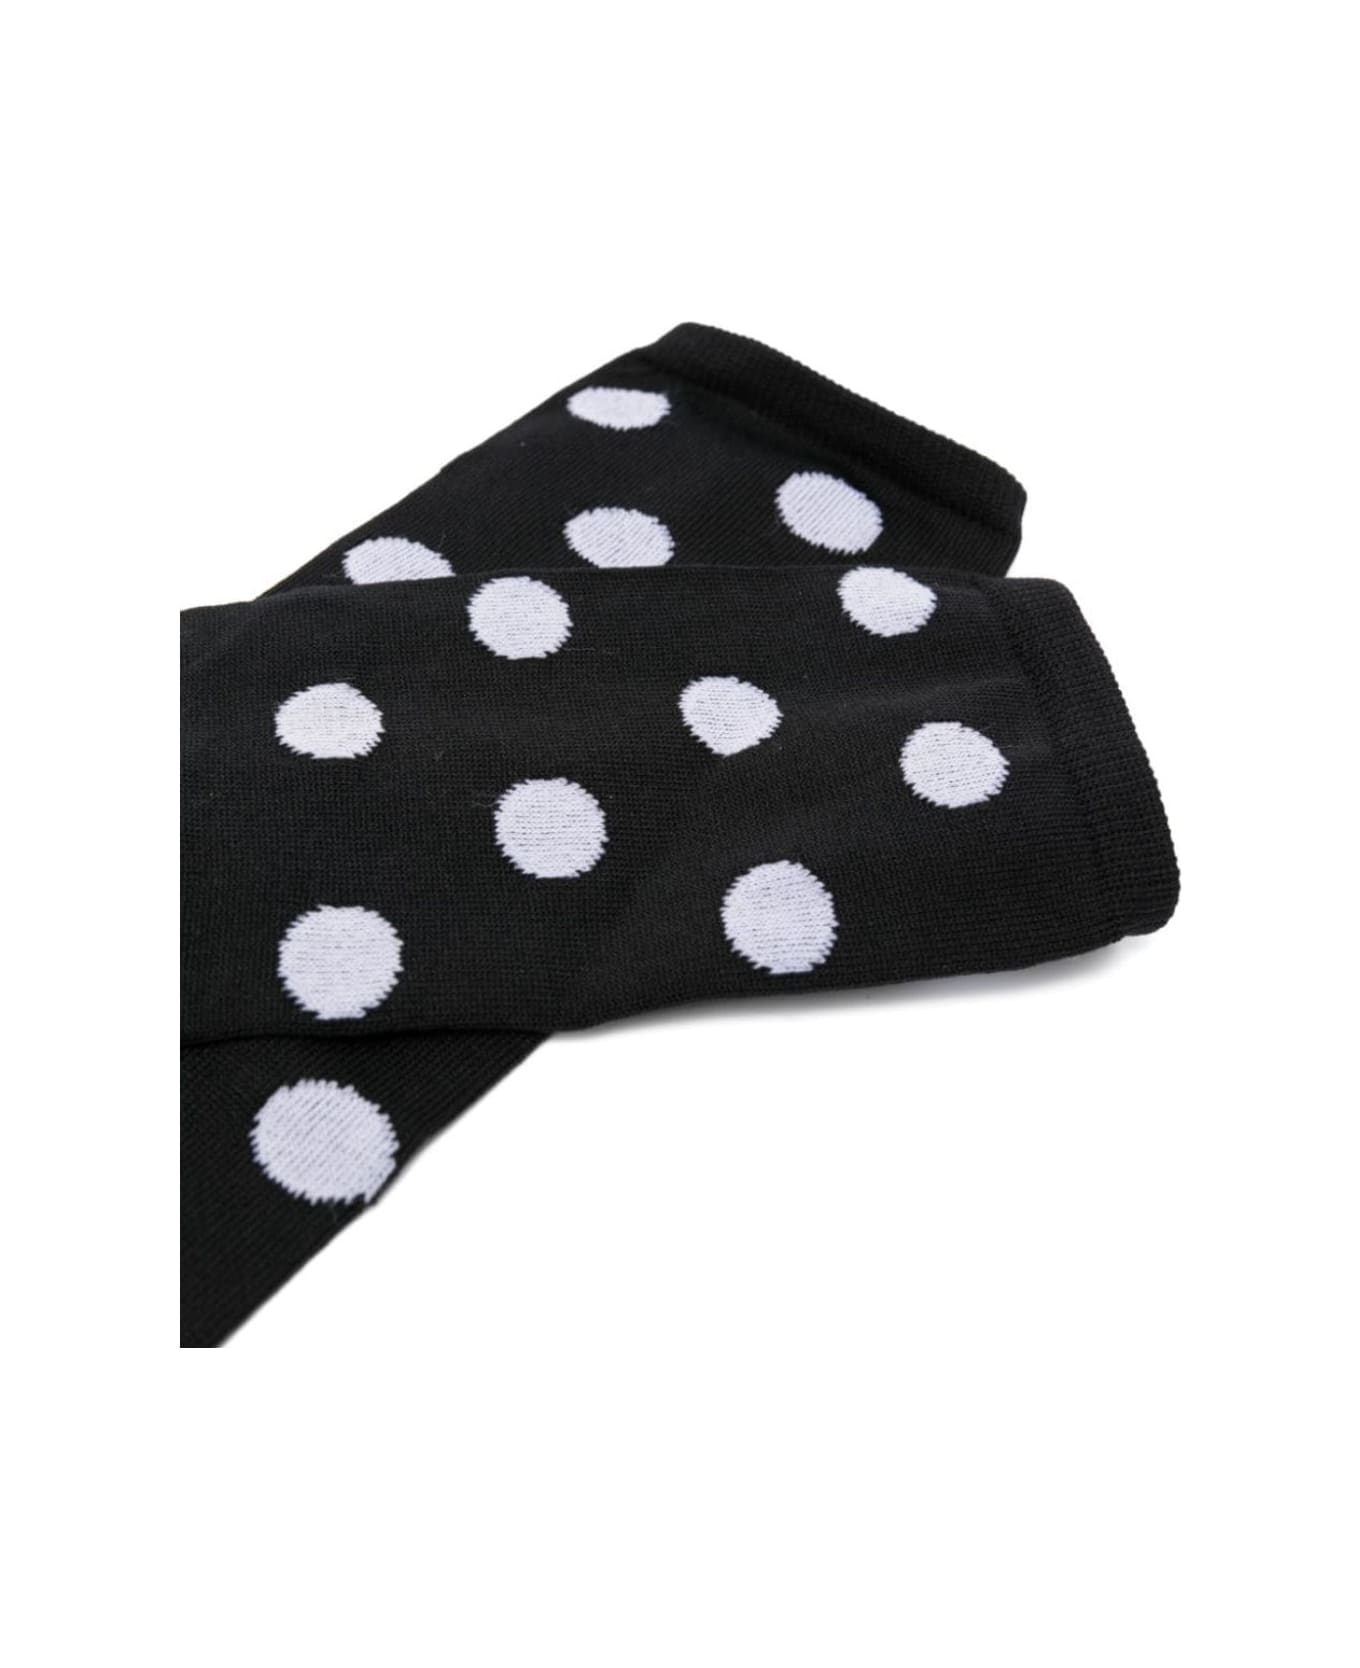 Marni Jacquard Small Polka Dots Socks - Black 靴下＆タイツ